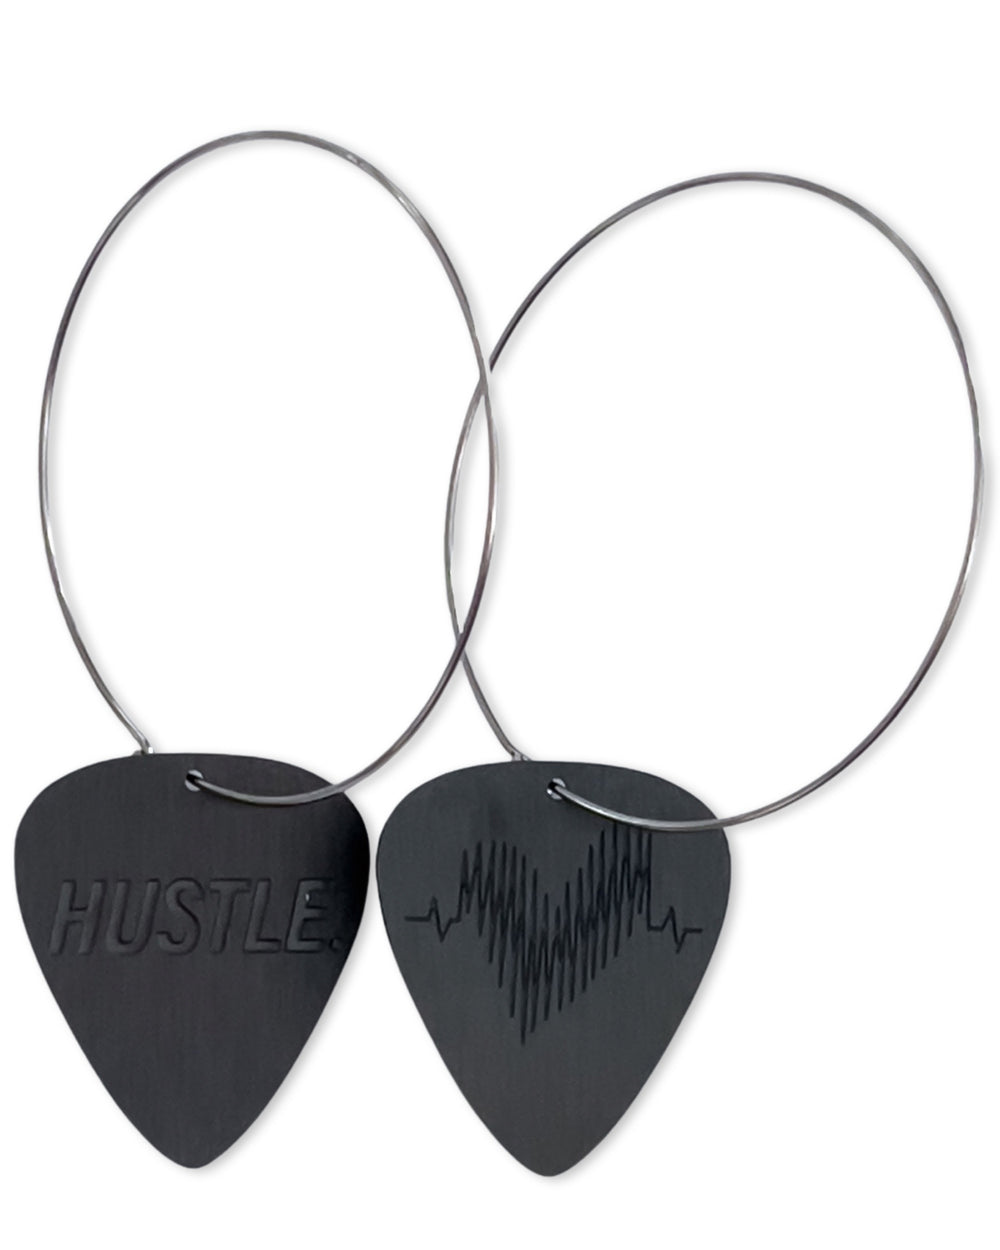 WS HUSTLE. Black Steel Reversible Single Guitar Pick Earrings